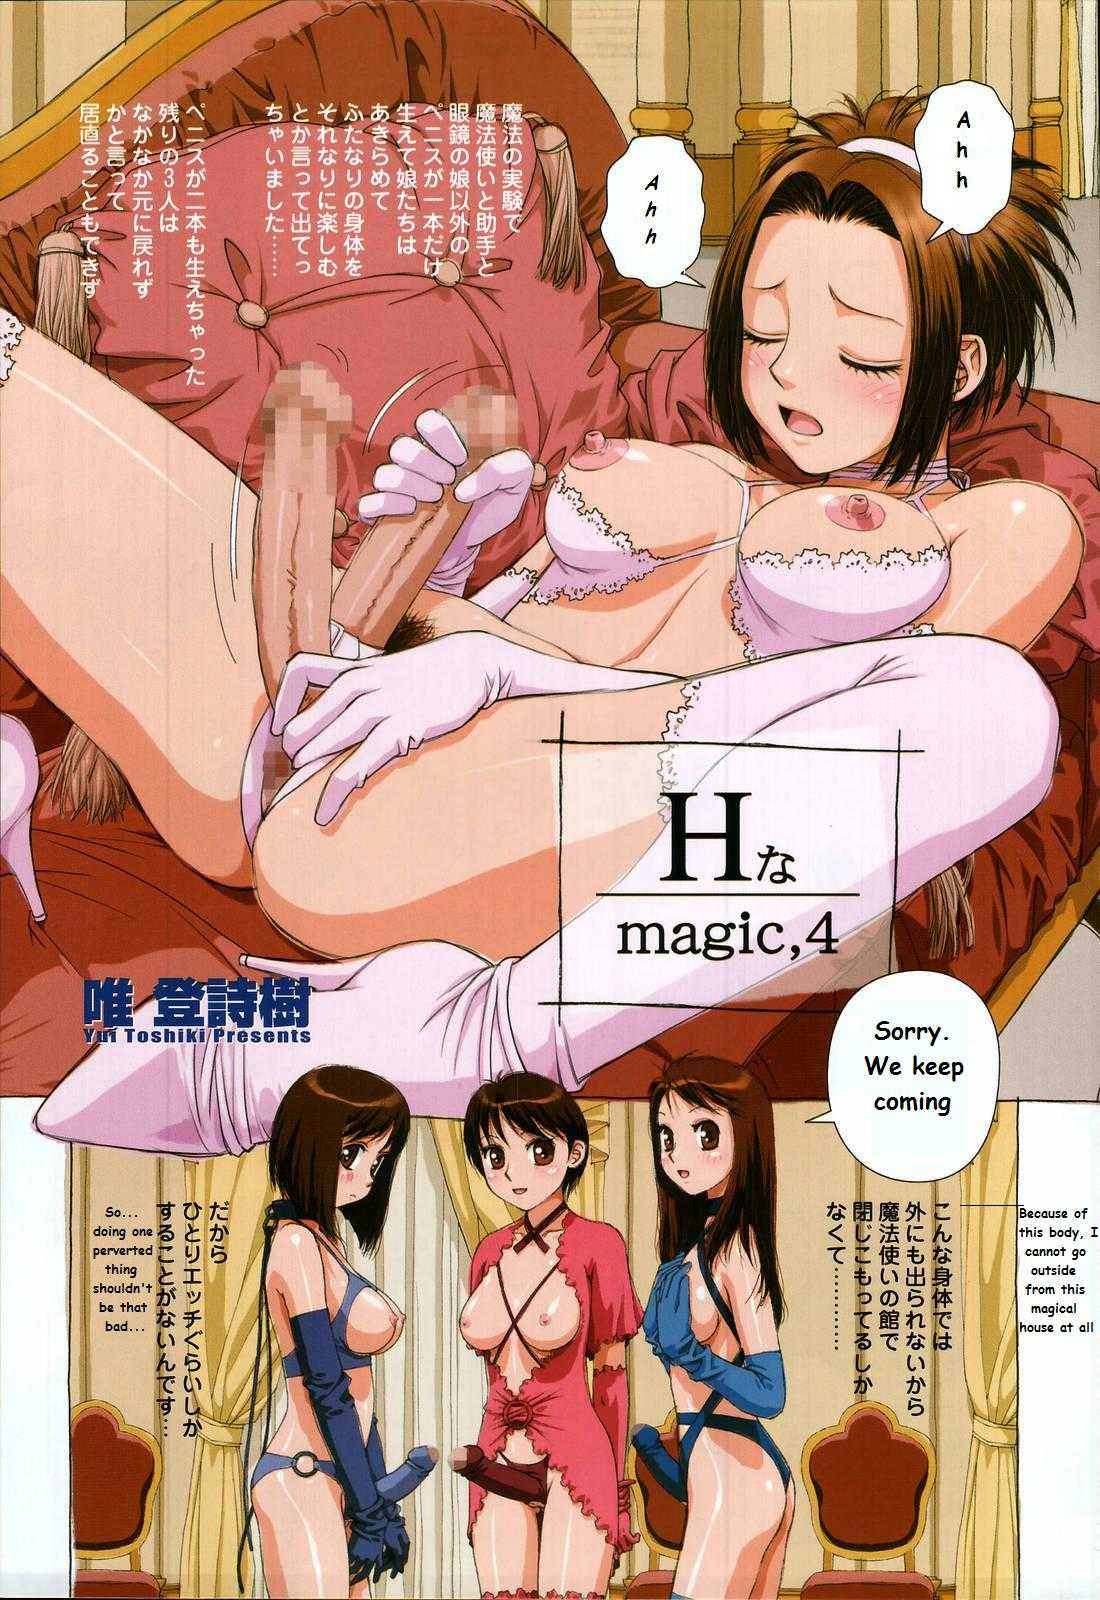 [Yui Toshiki] H Magic 